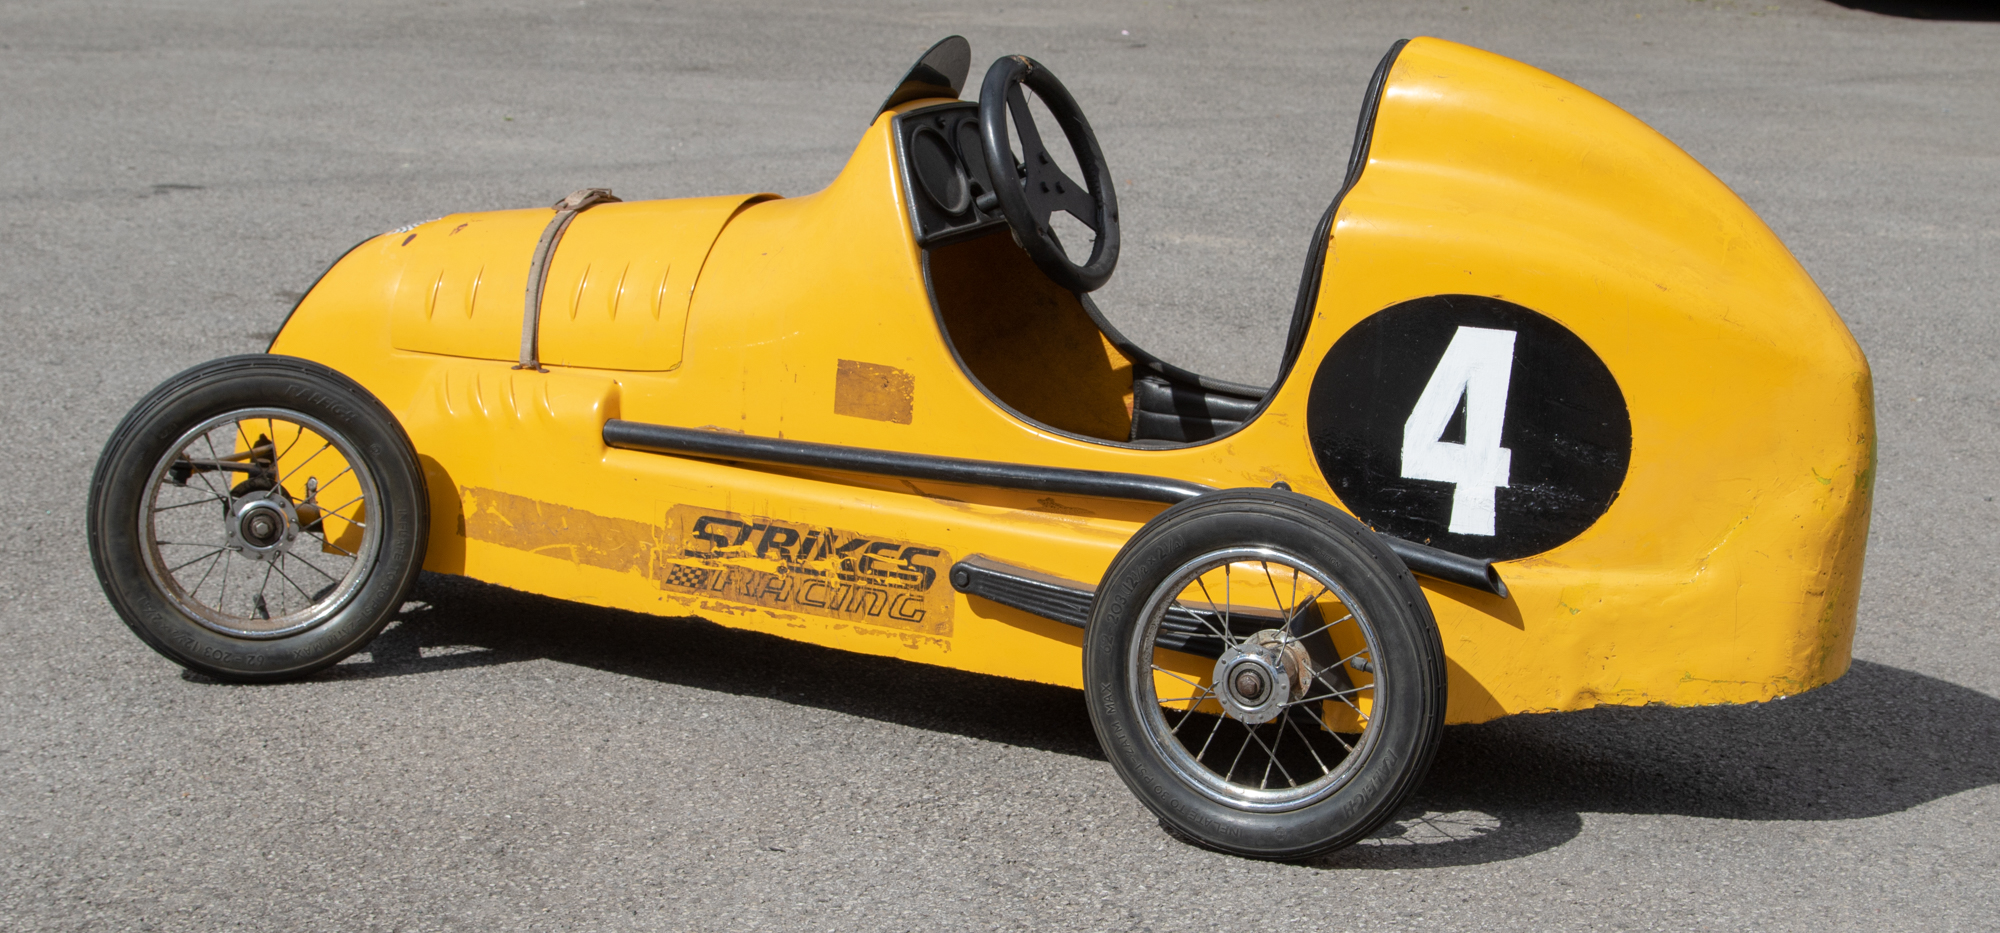 Pedal Car: A yellow, Strike's Racing, Model 750 Racer, racing pedal car, No.